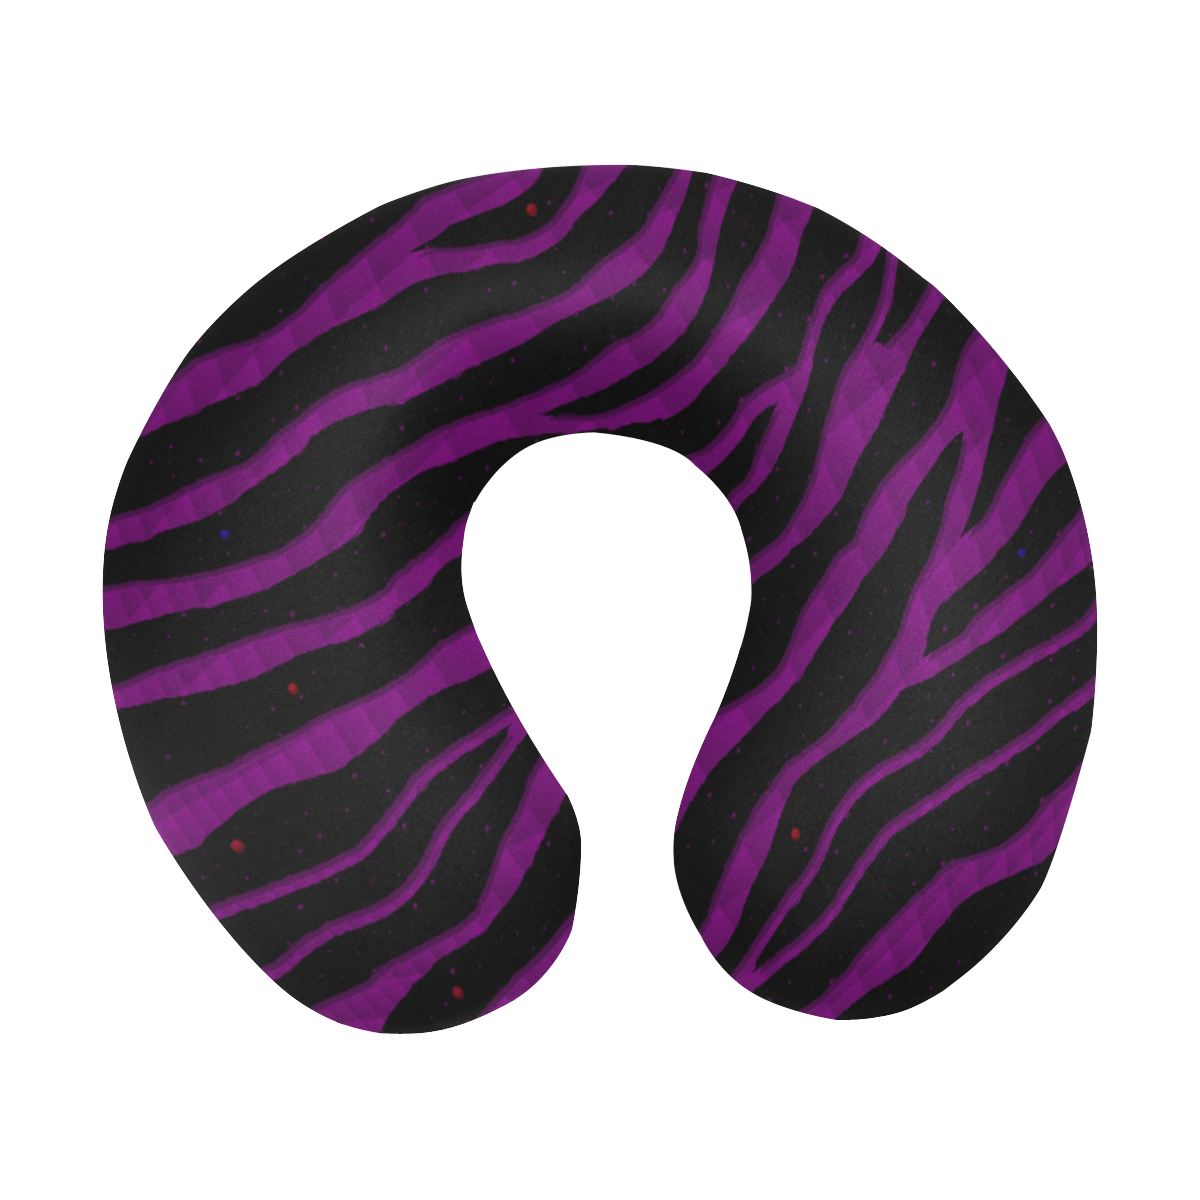 Ripped SpaceTime Stripes - Purple U-Shape Travel Pillow